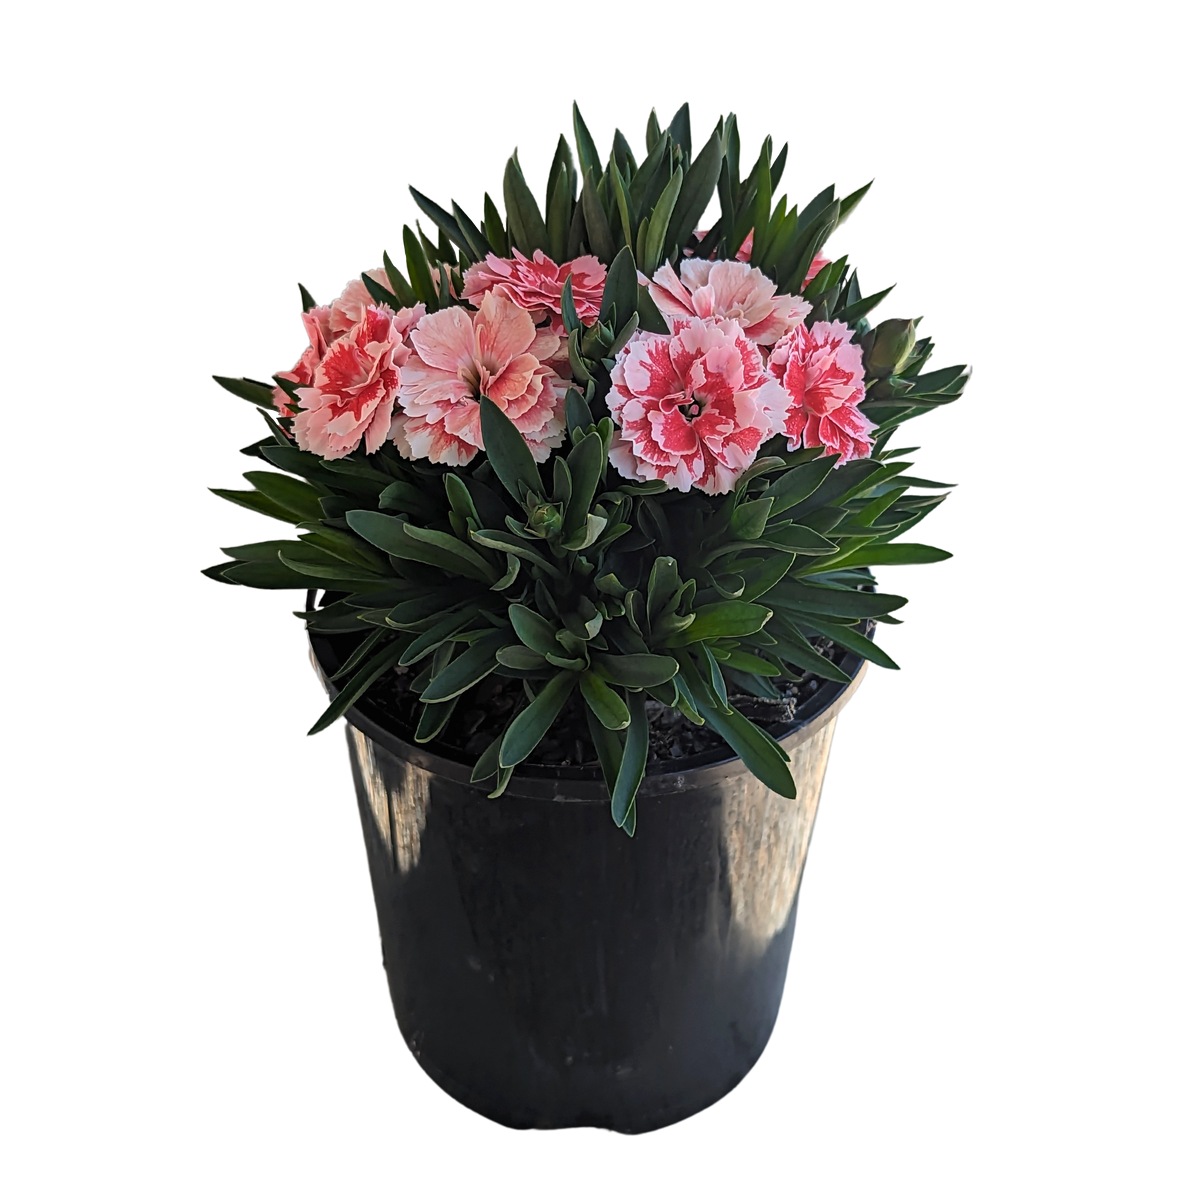 Dianthus caryophyllus - Carnation 125mm